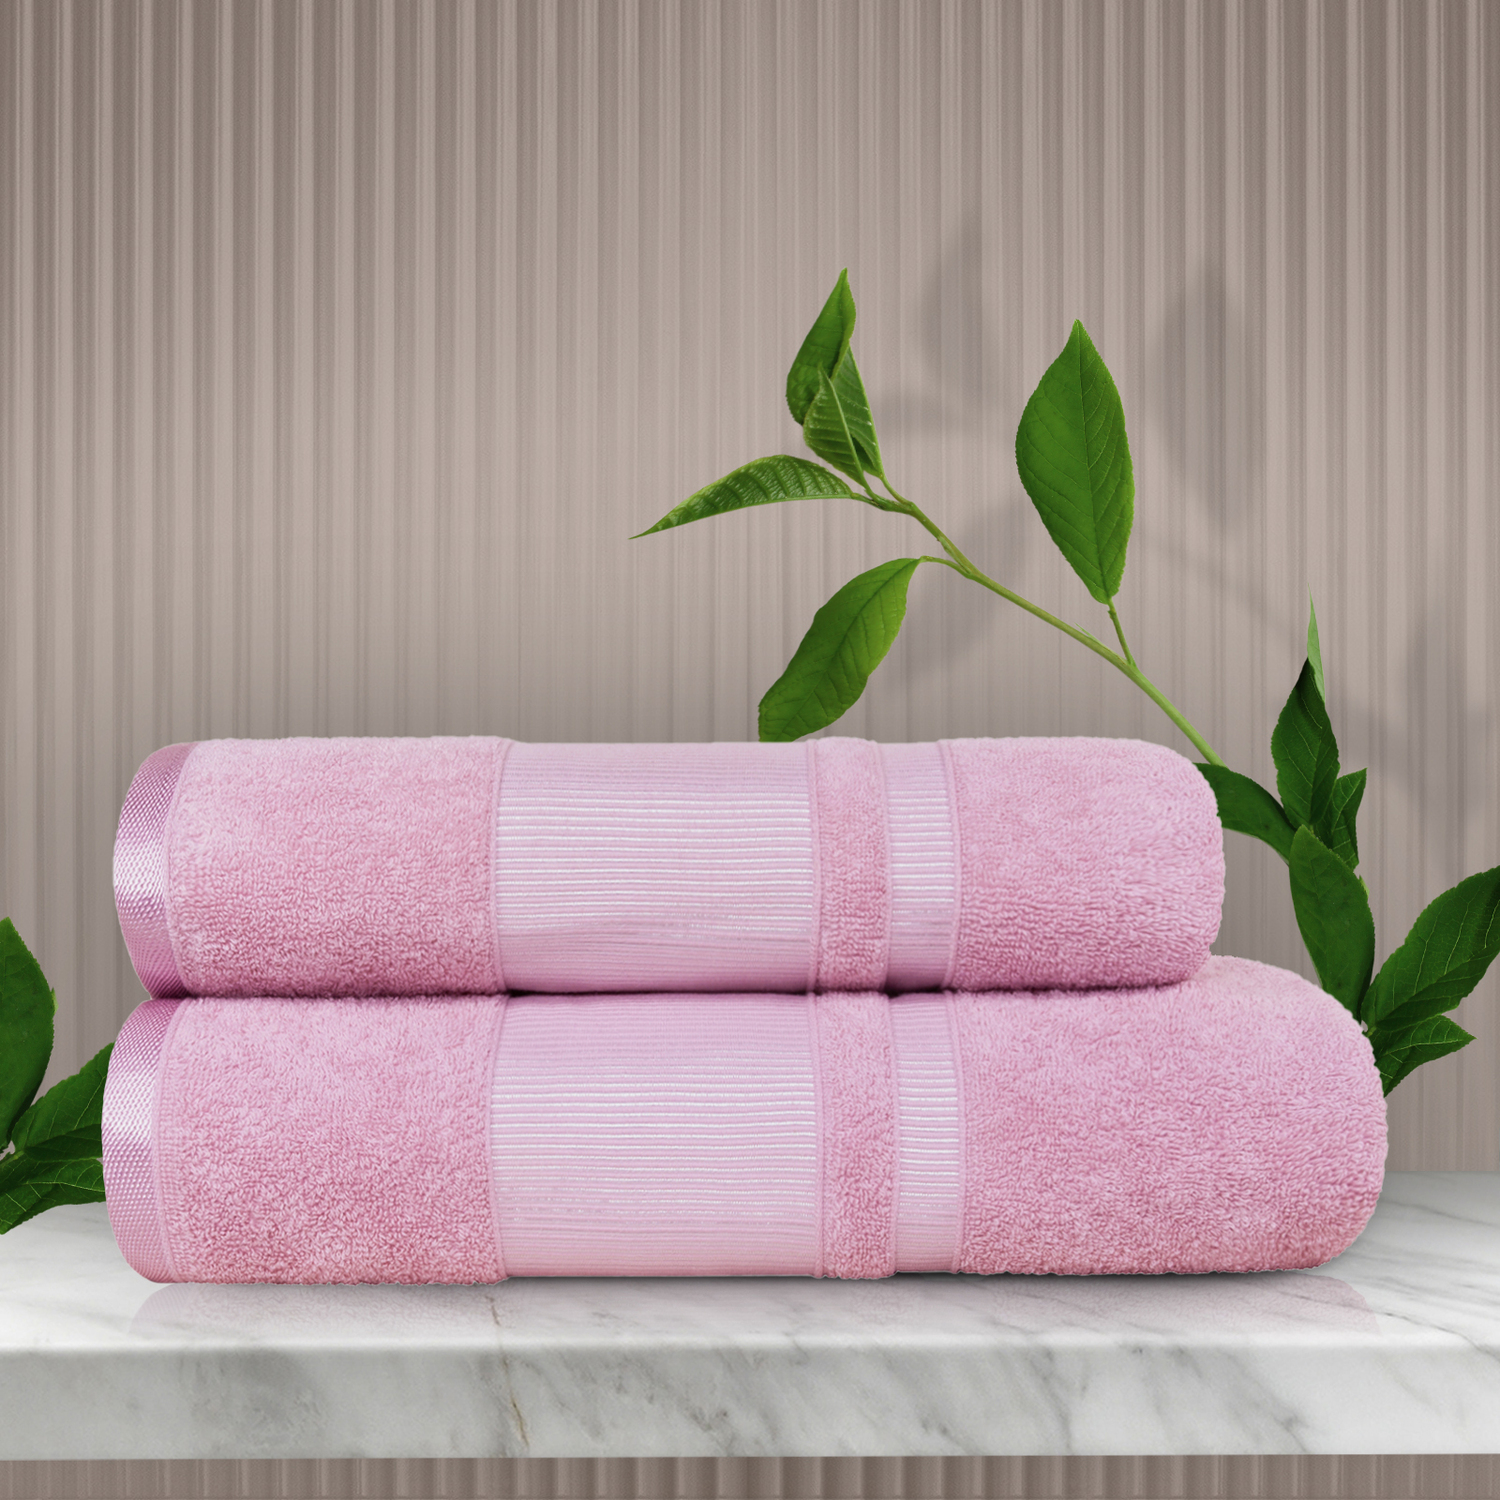 Полотенце Duhoba цвет: розовый (50х90 см)